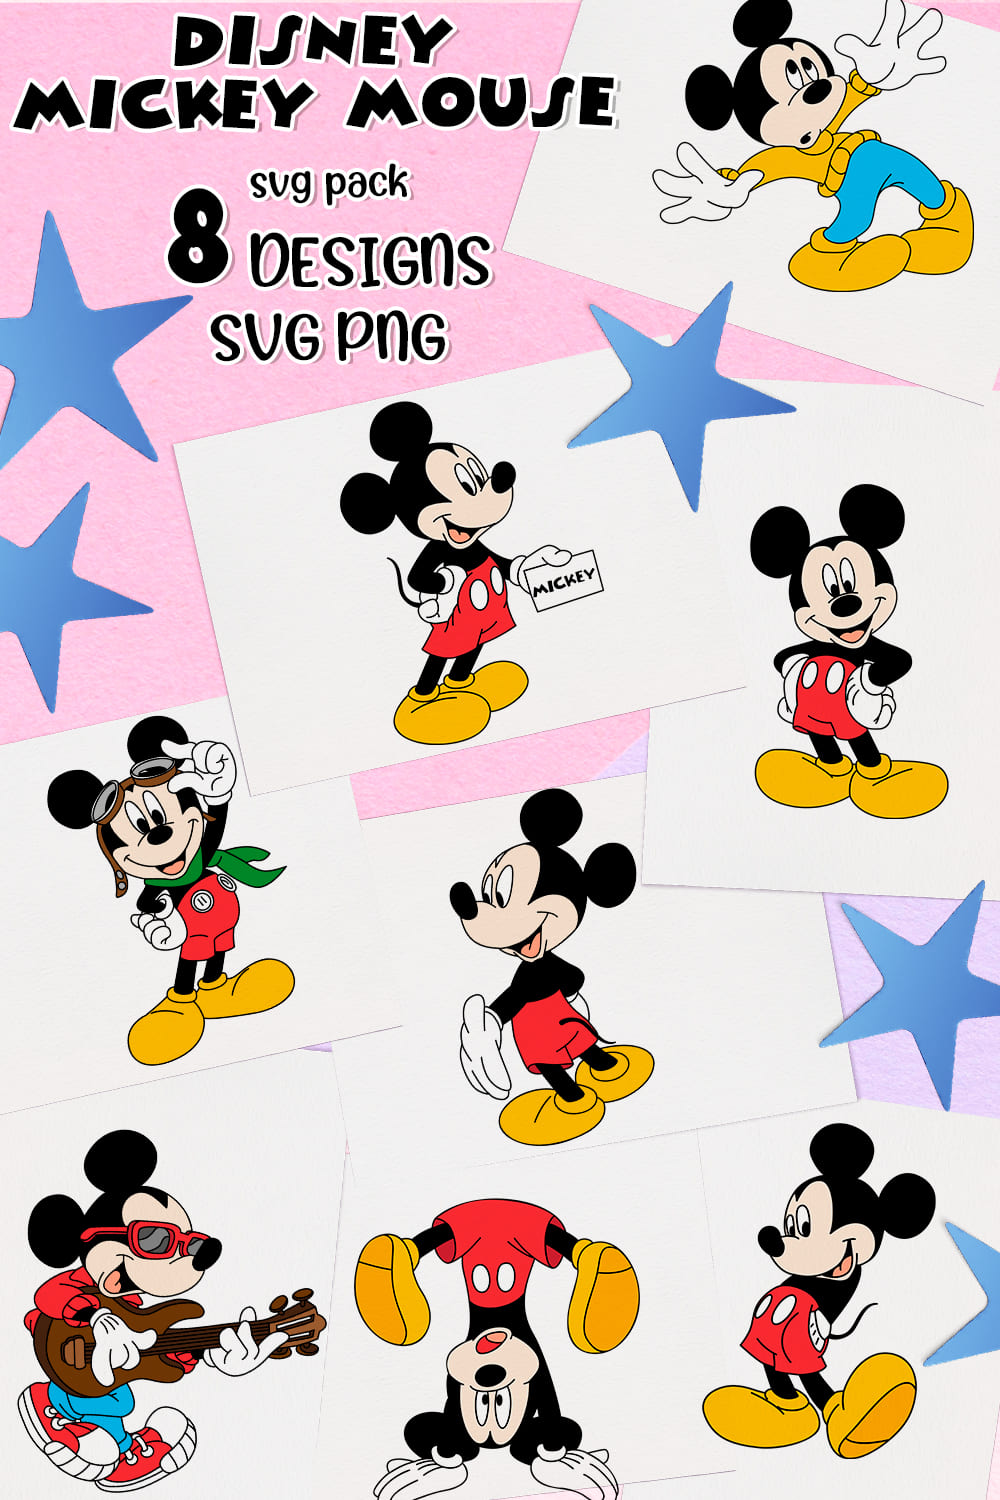 Disney Mickey Mouse Svg - Pinterest.